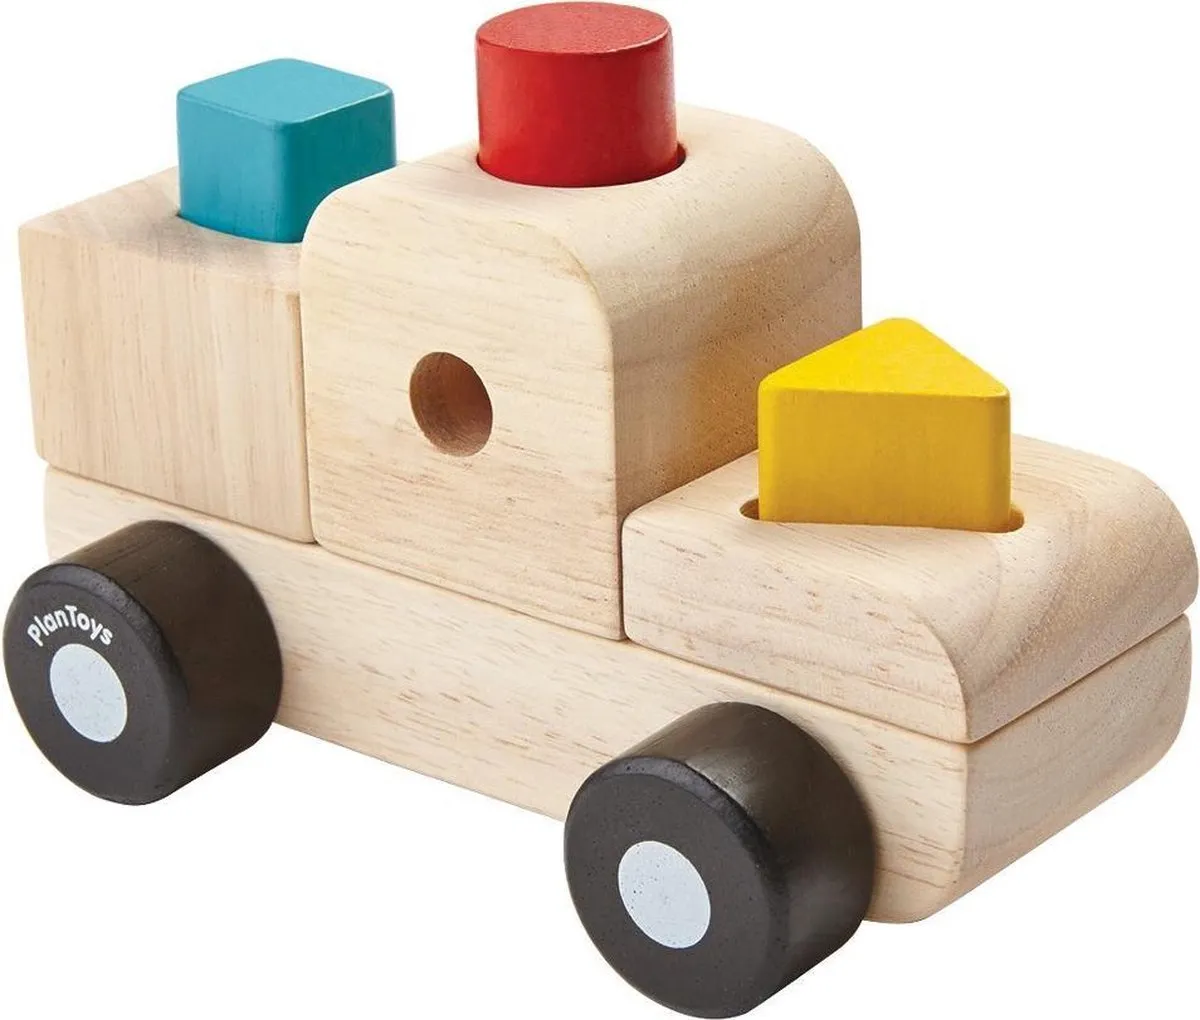 Plan Toys vormenpuzzel Sorting Puzzle Truck 5433 speelgoed